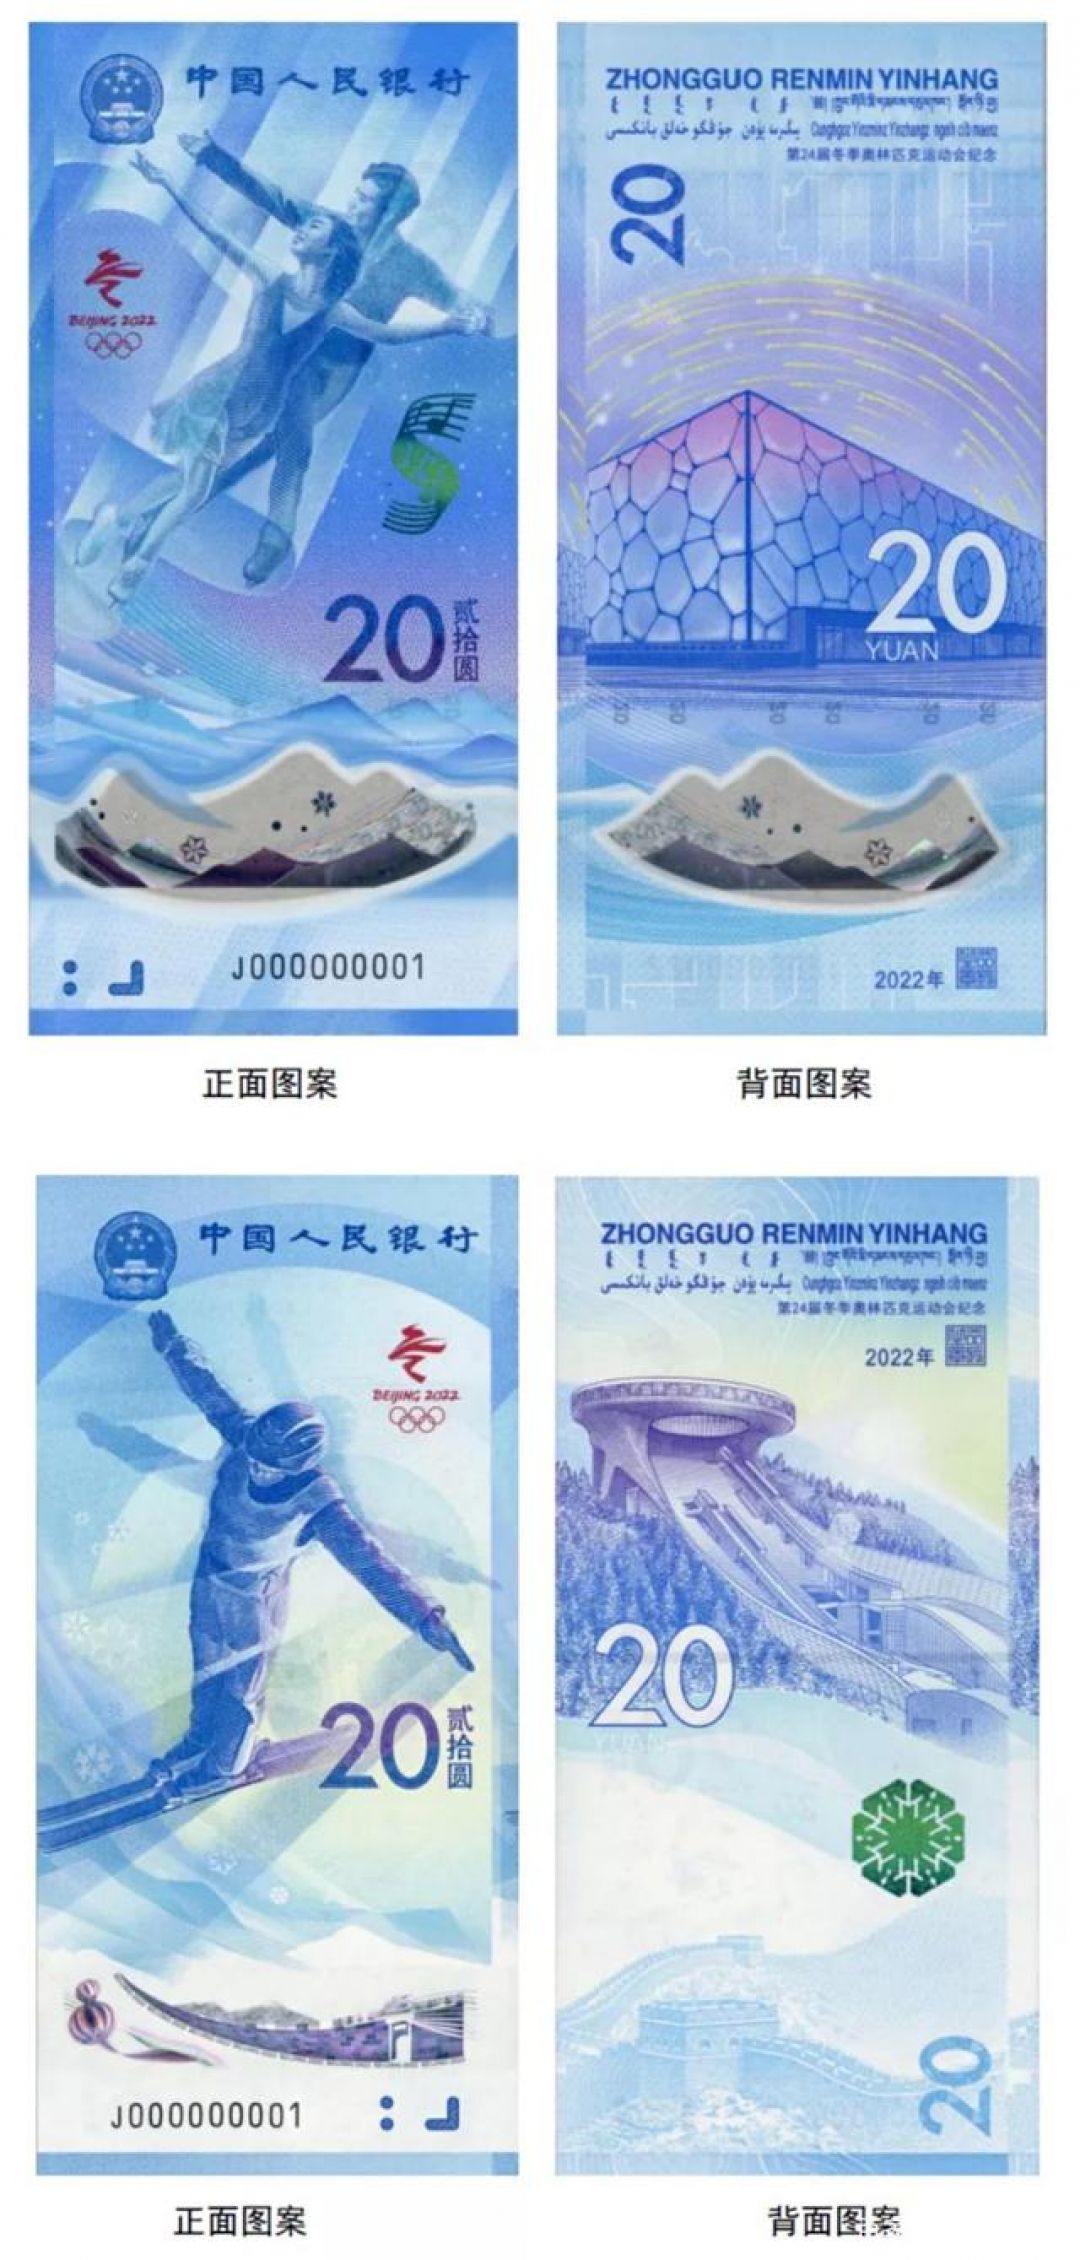 China Terbitkan Uang Kertas Versi Olimpiade Beijing 2022-Image-2